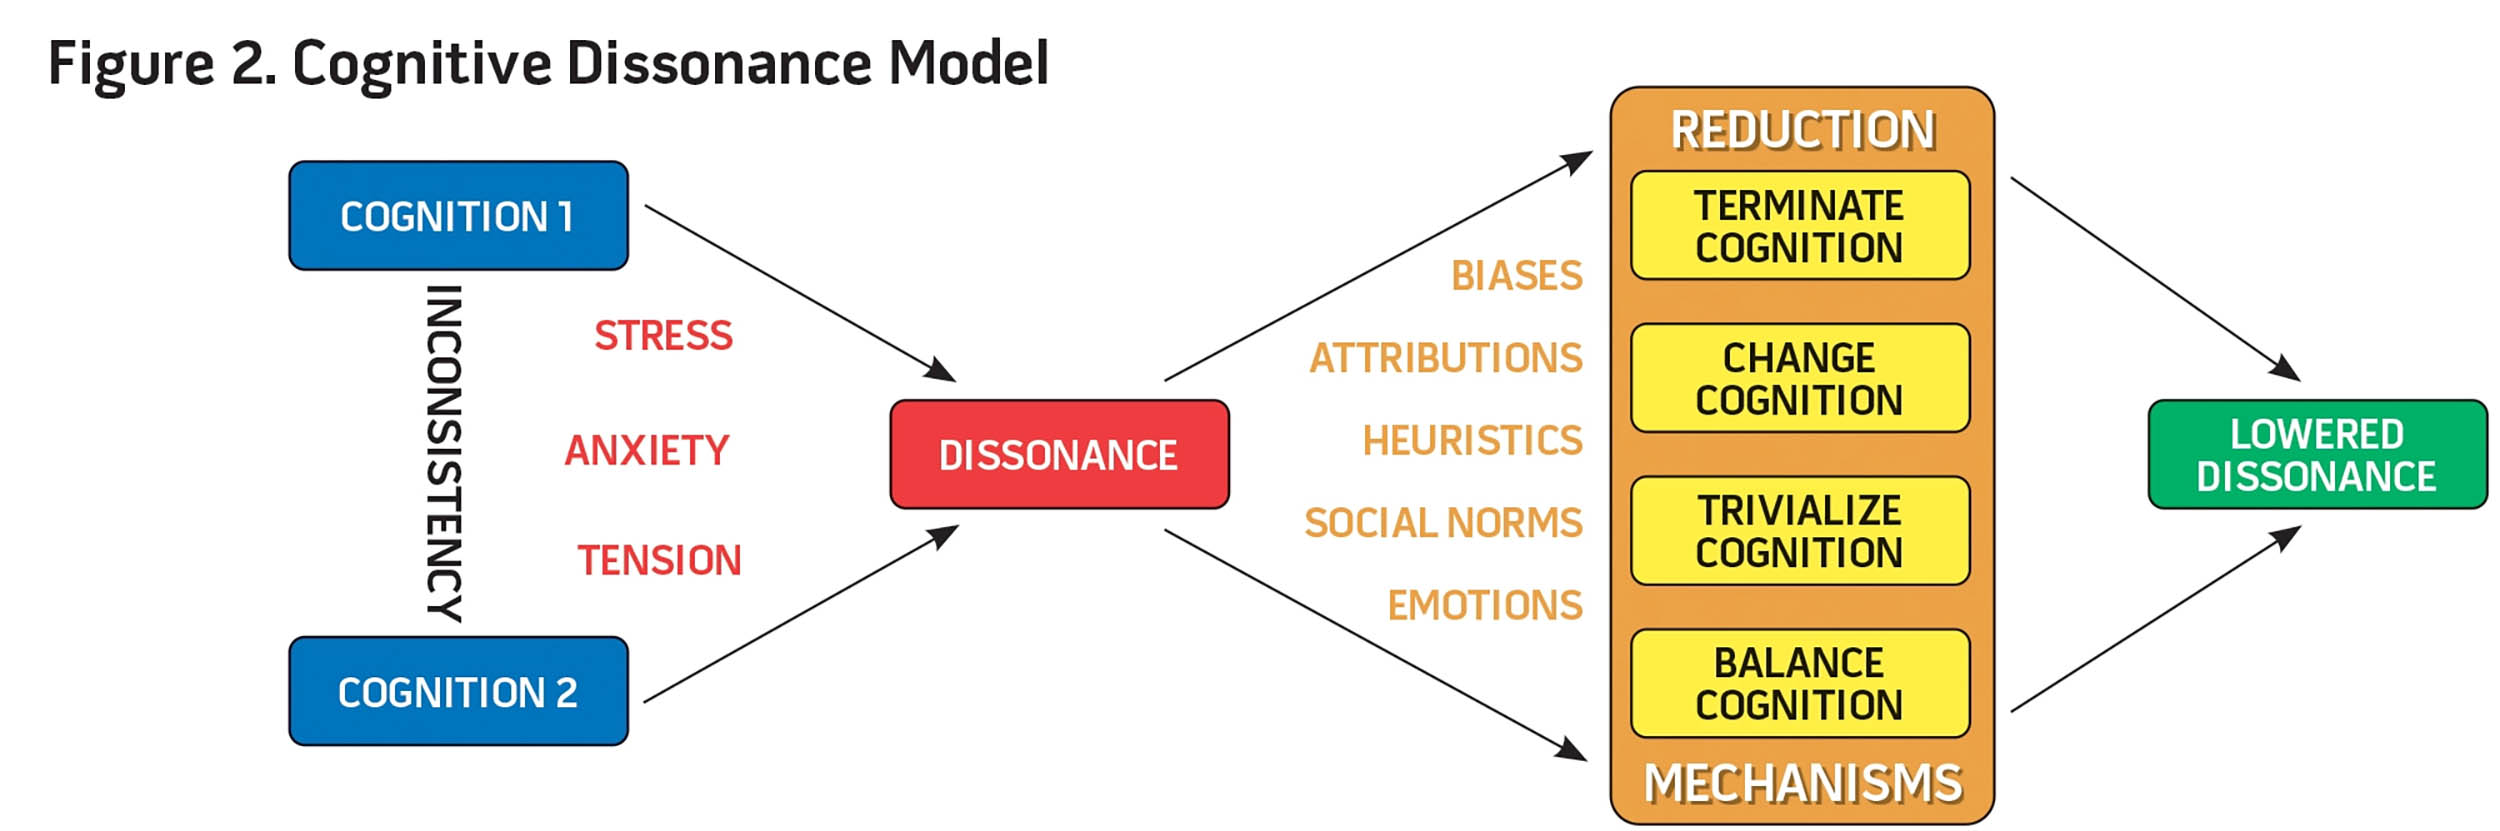 Figure 2. Cognitive Dissonance Model